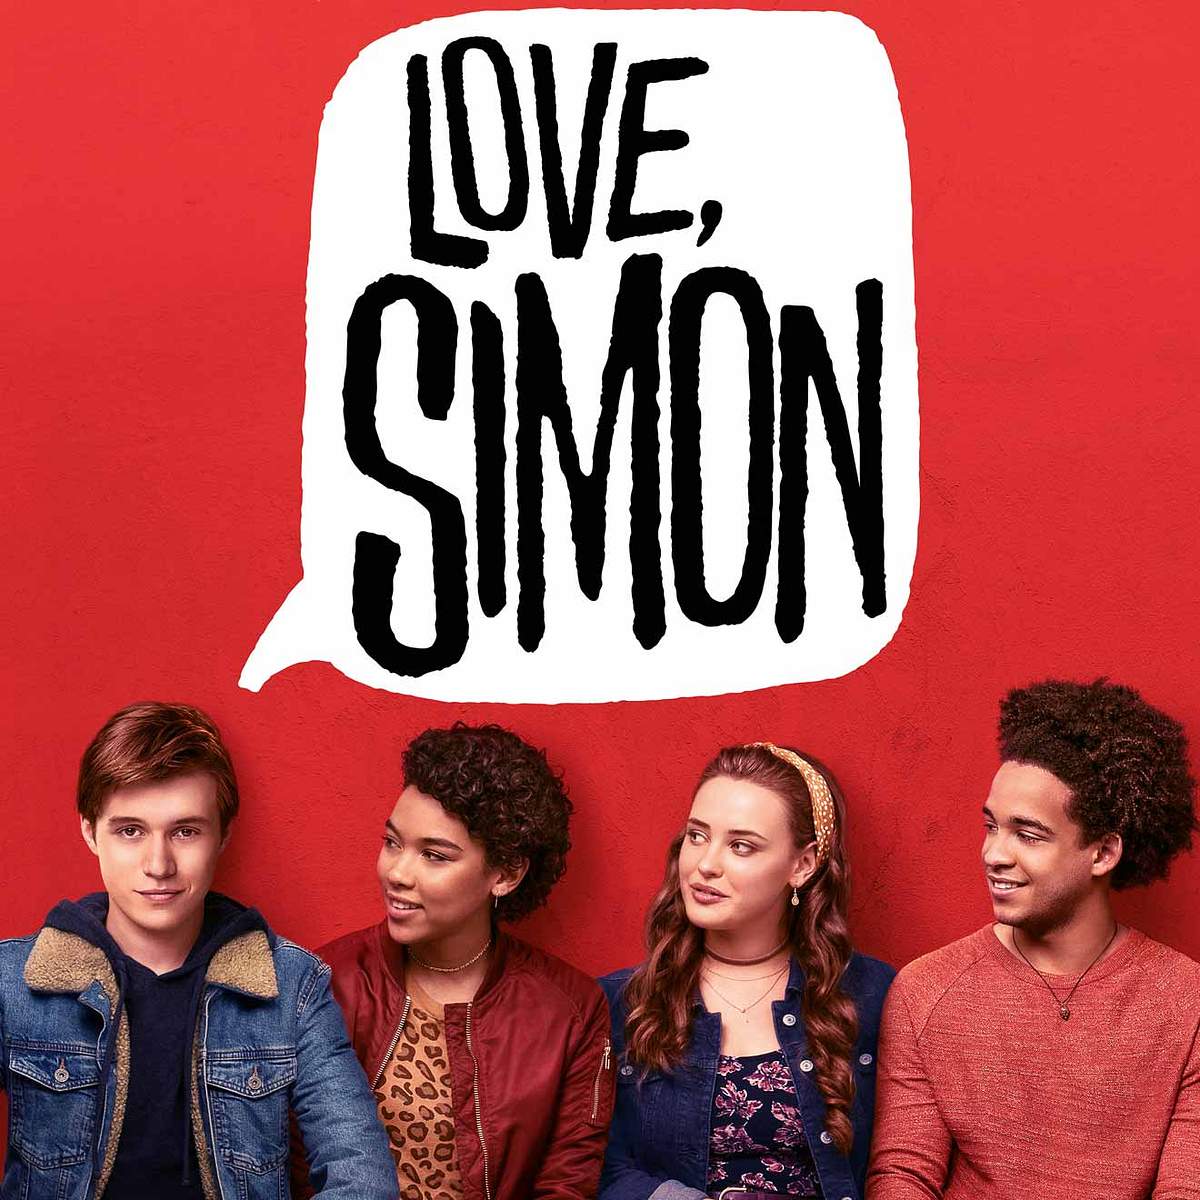 Die besten High School Filme  Love, Simon